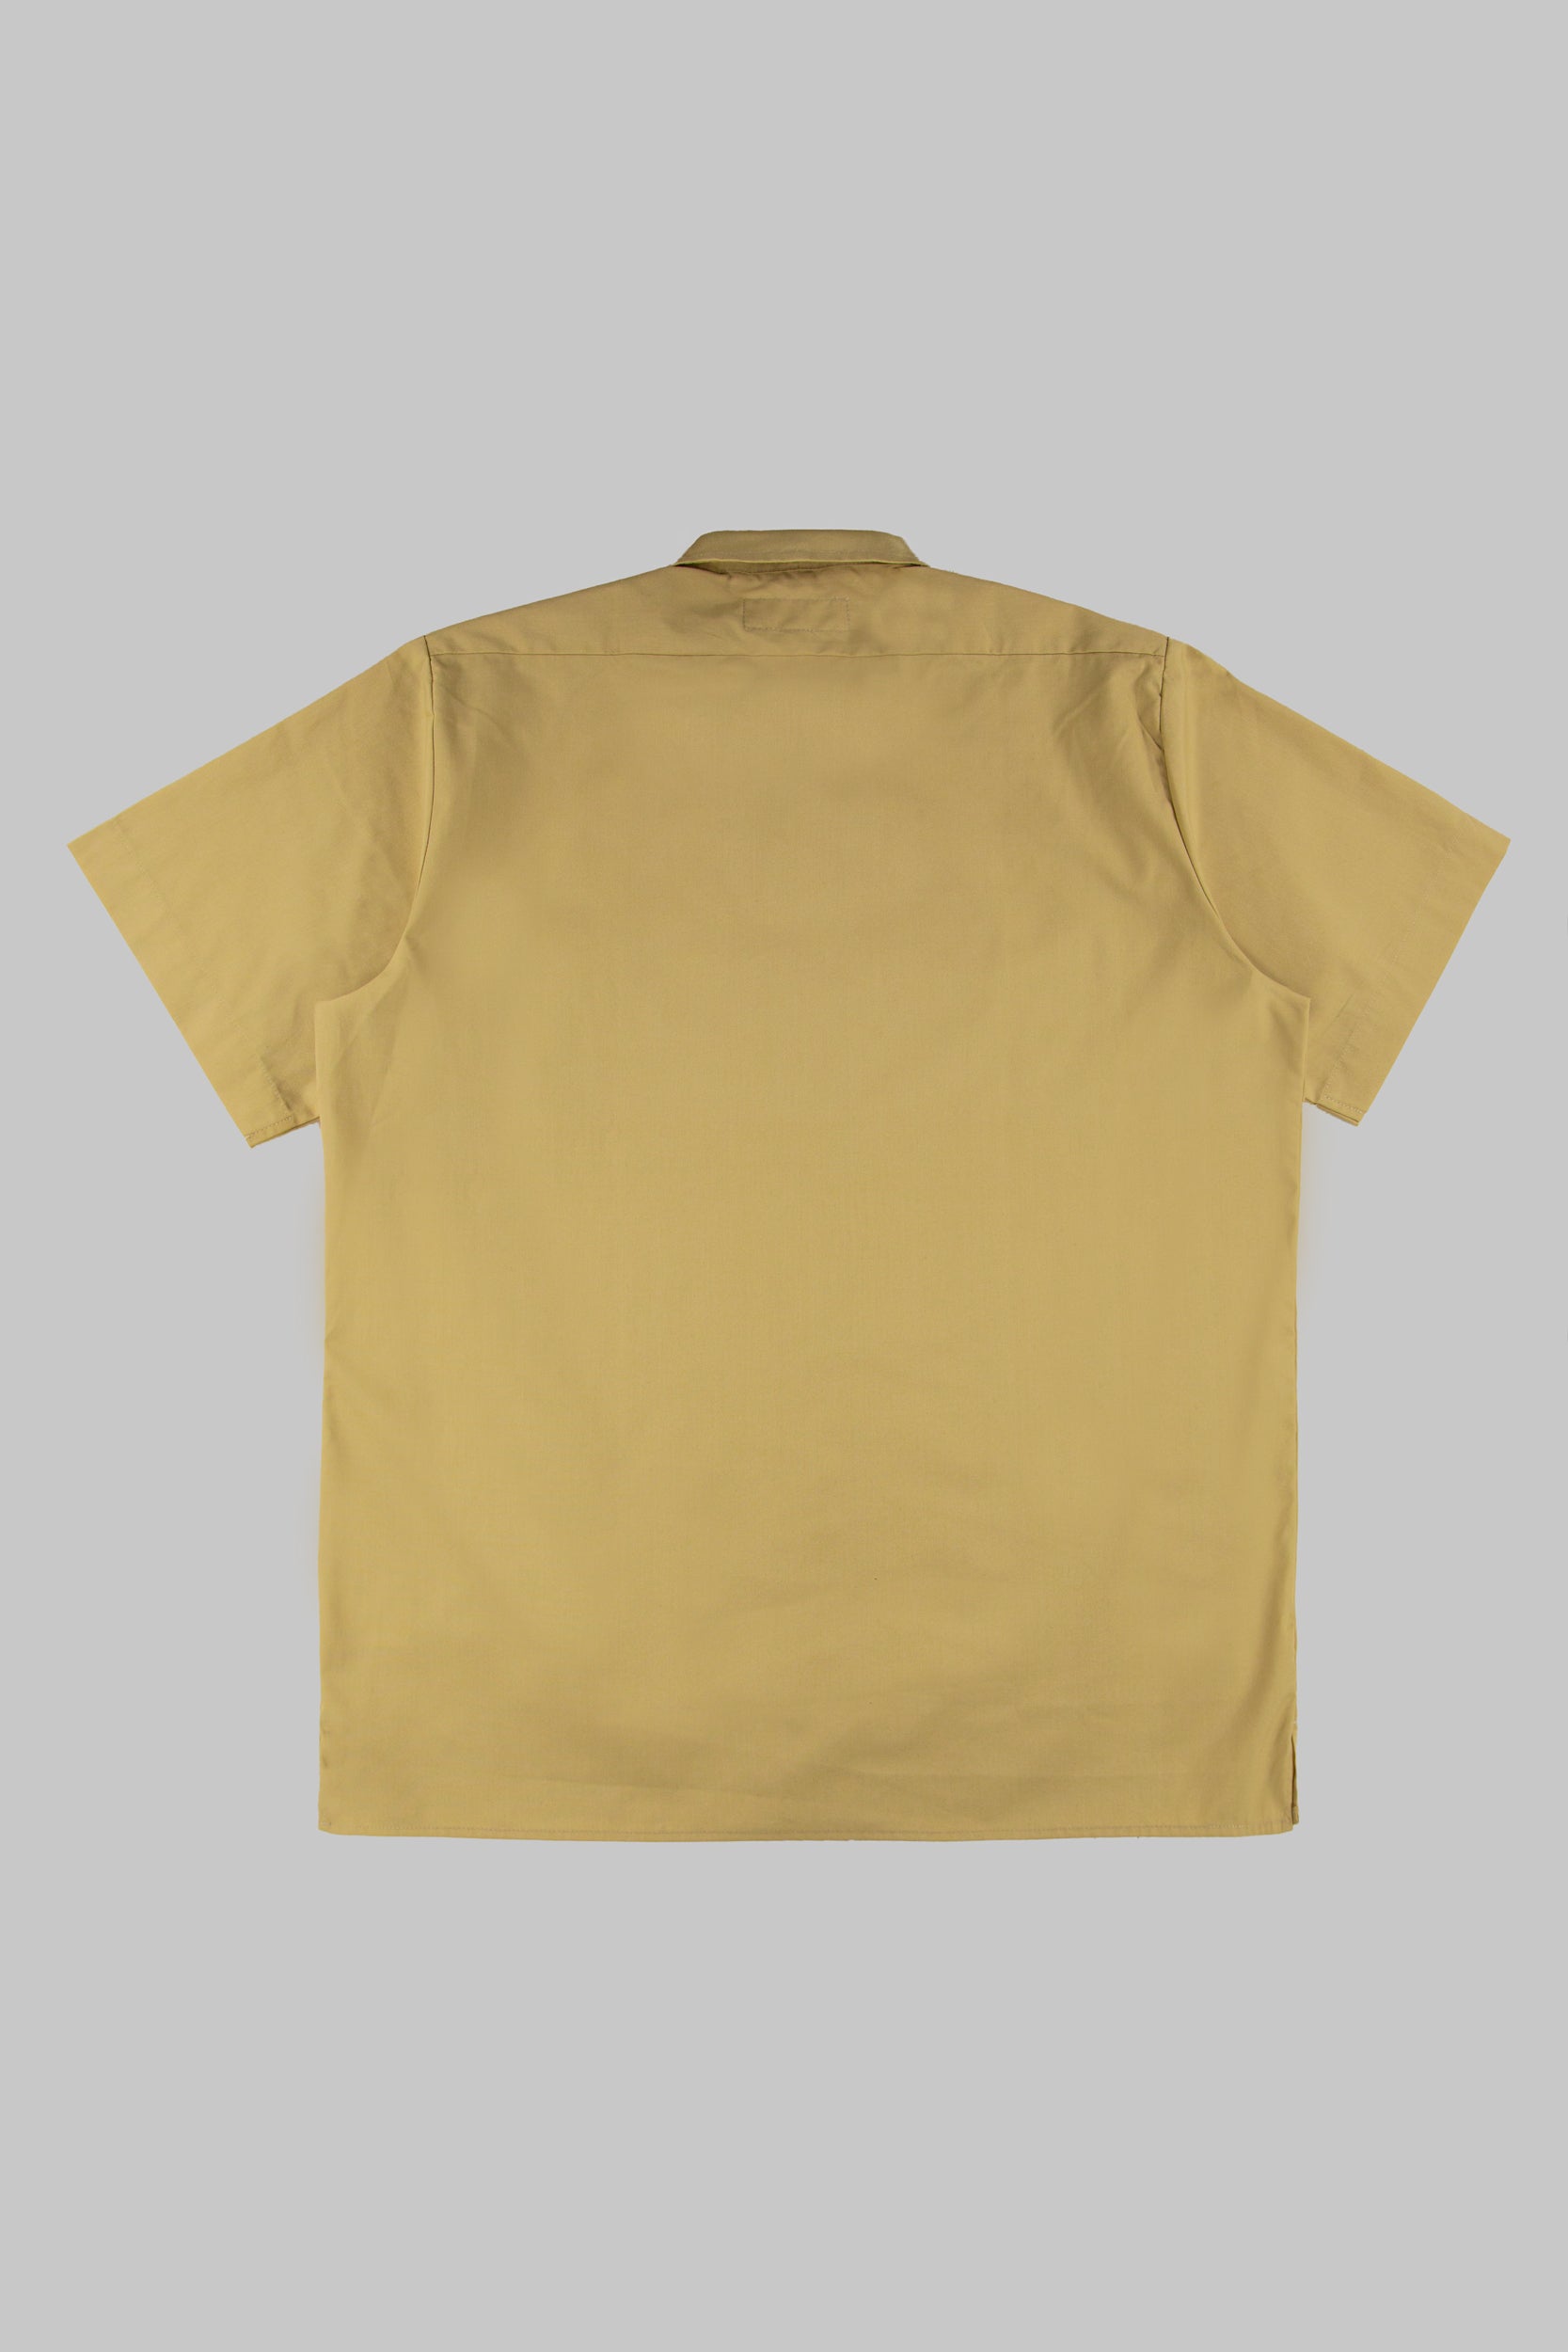 Tripps Shirt Muted Yellow